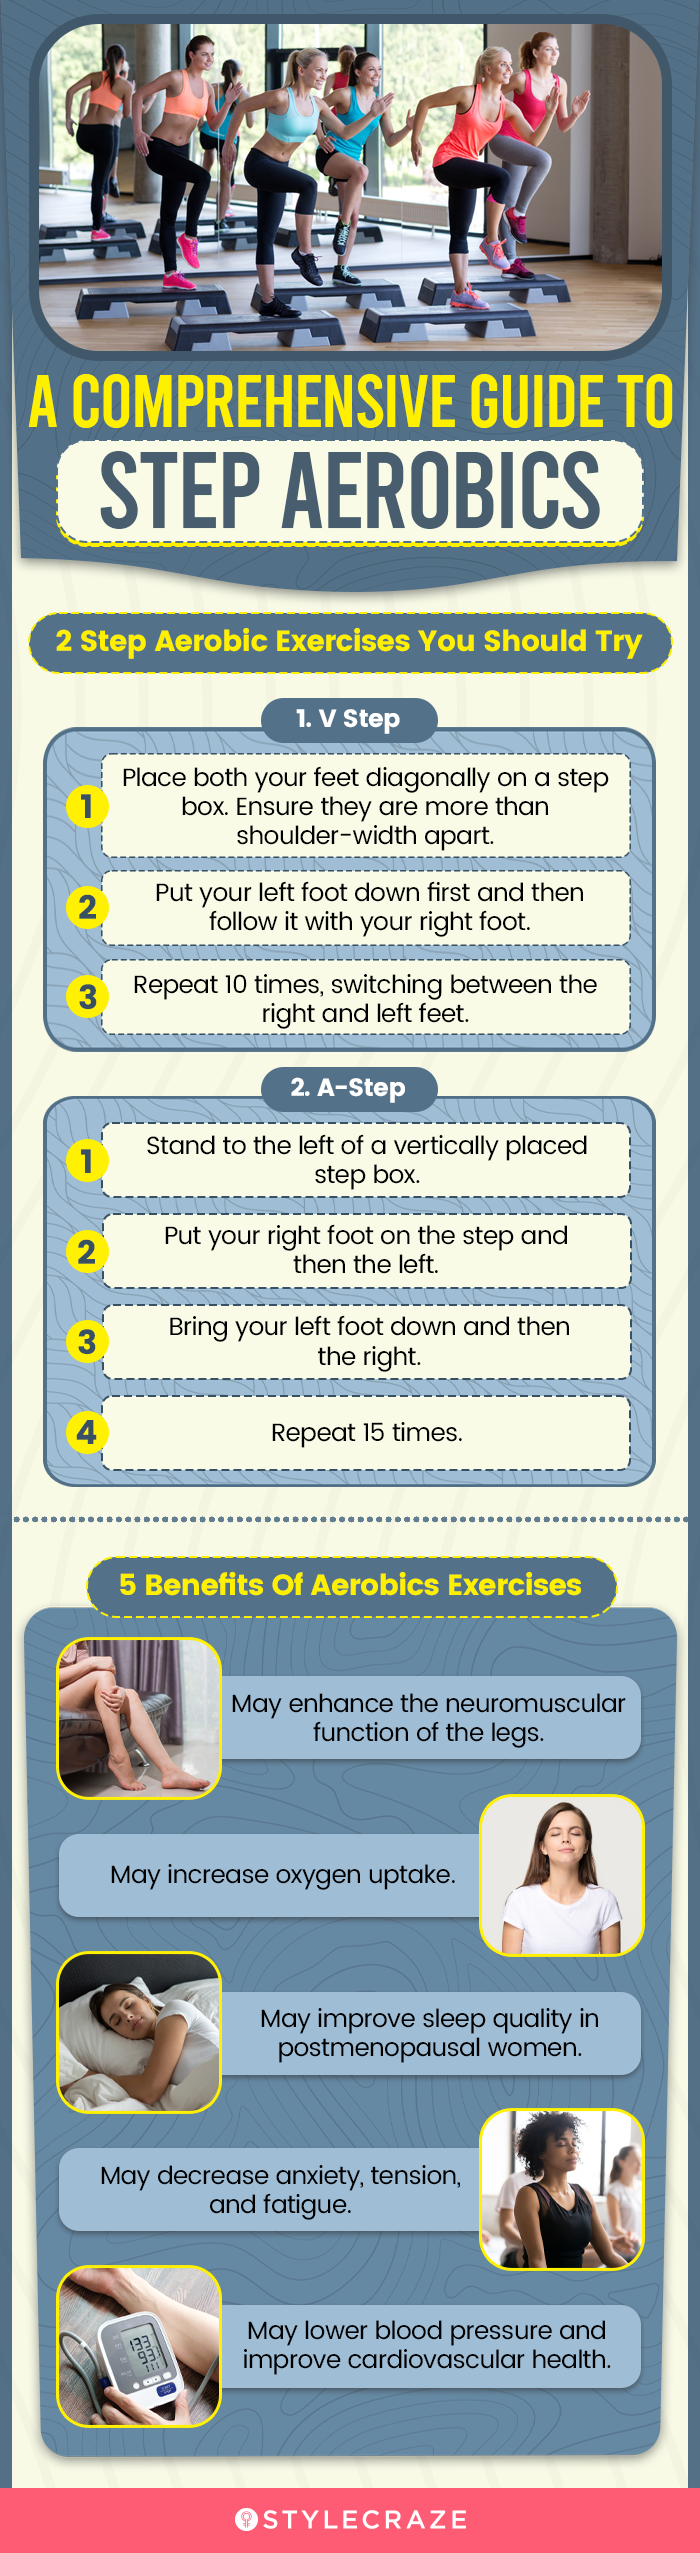 a comprehensive guide to step aerobics (infographic)